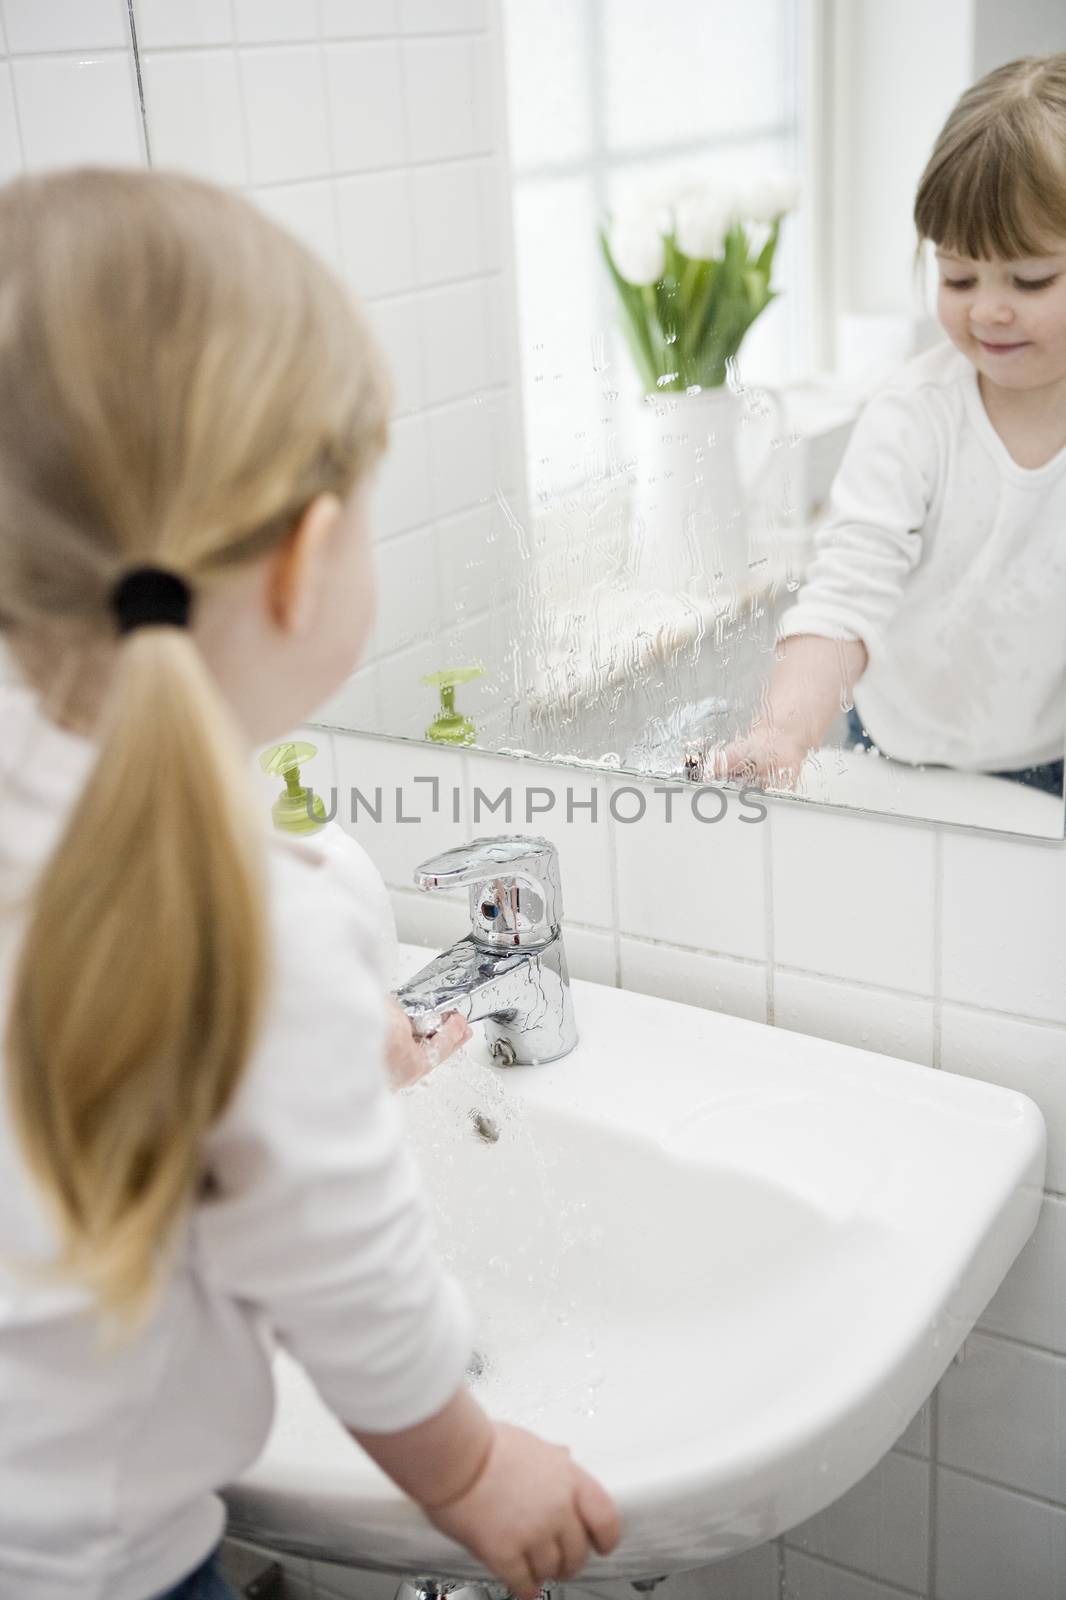 Washing hands by gemenacom